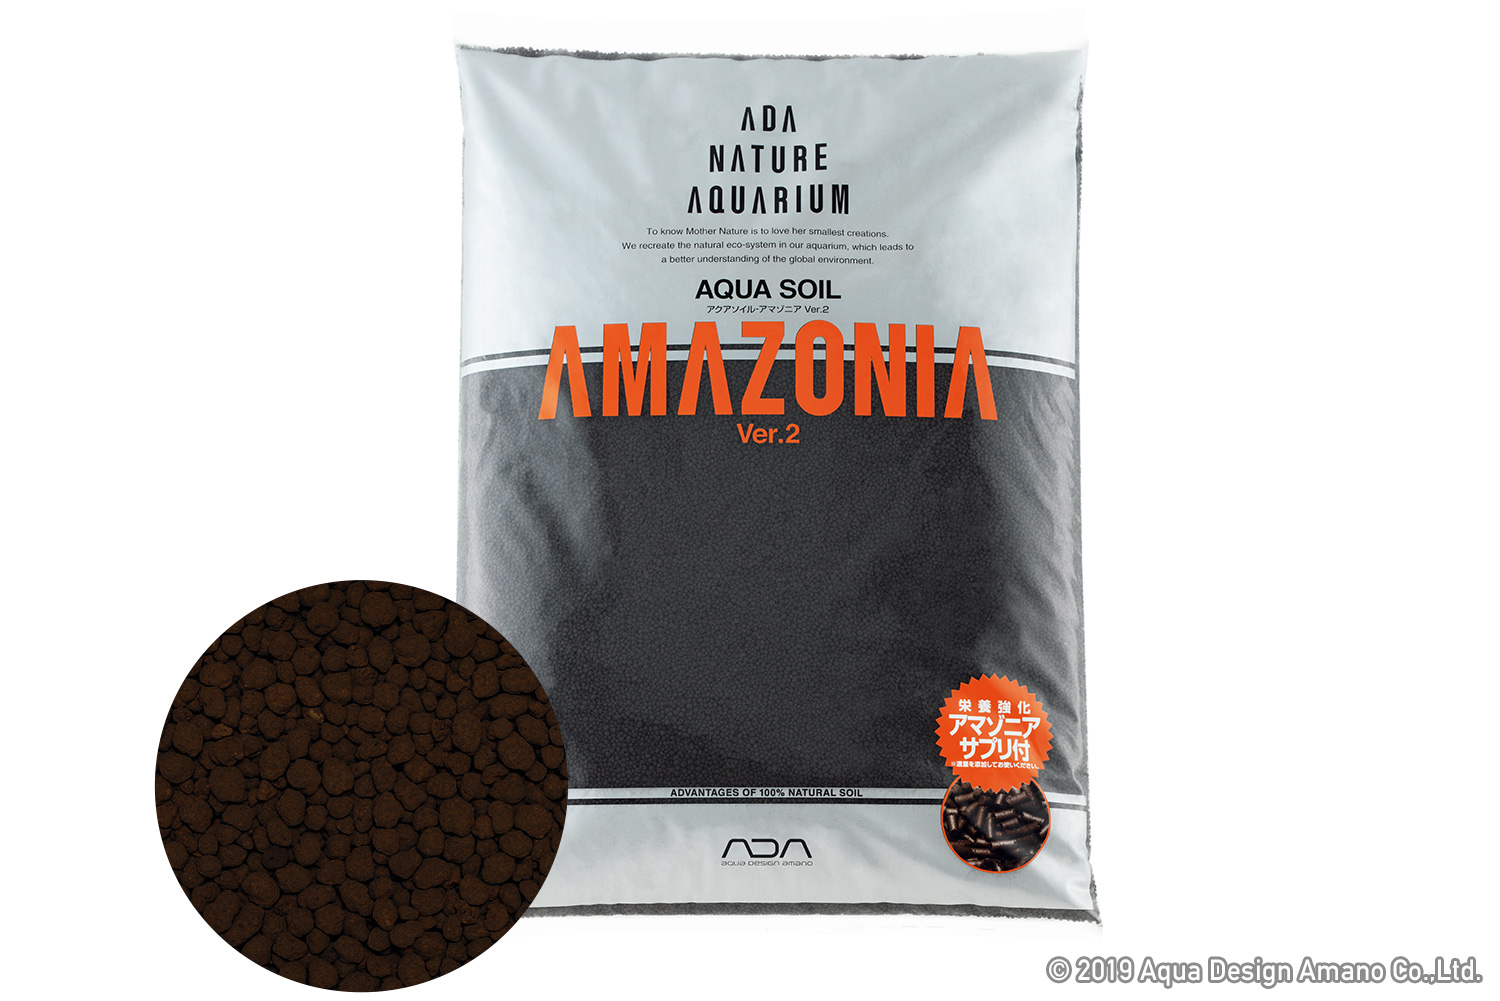 Make Keep Aqua Soil Amazonia Ver 2 Aqua Design Amano